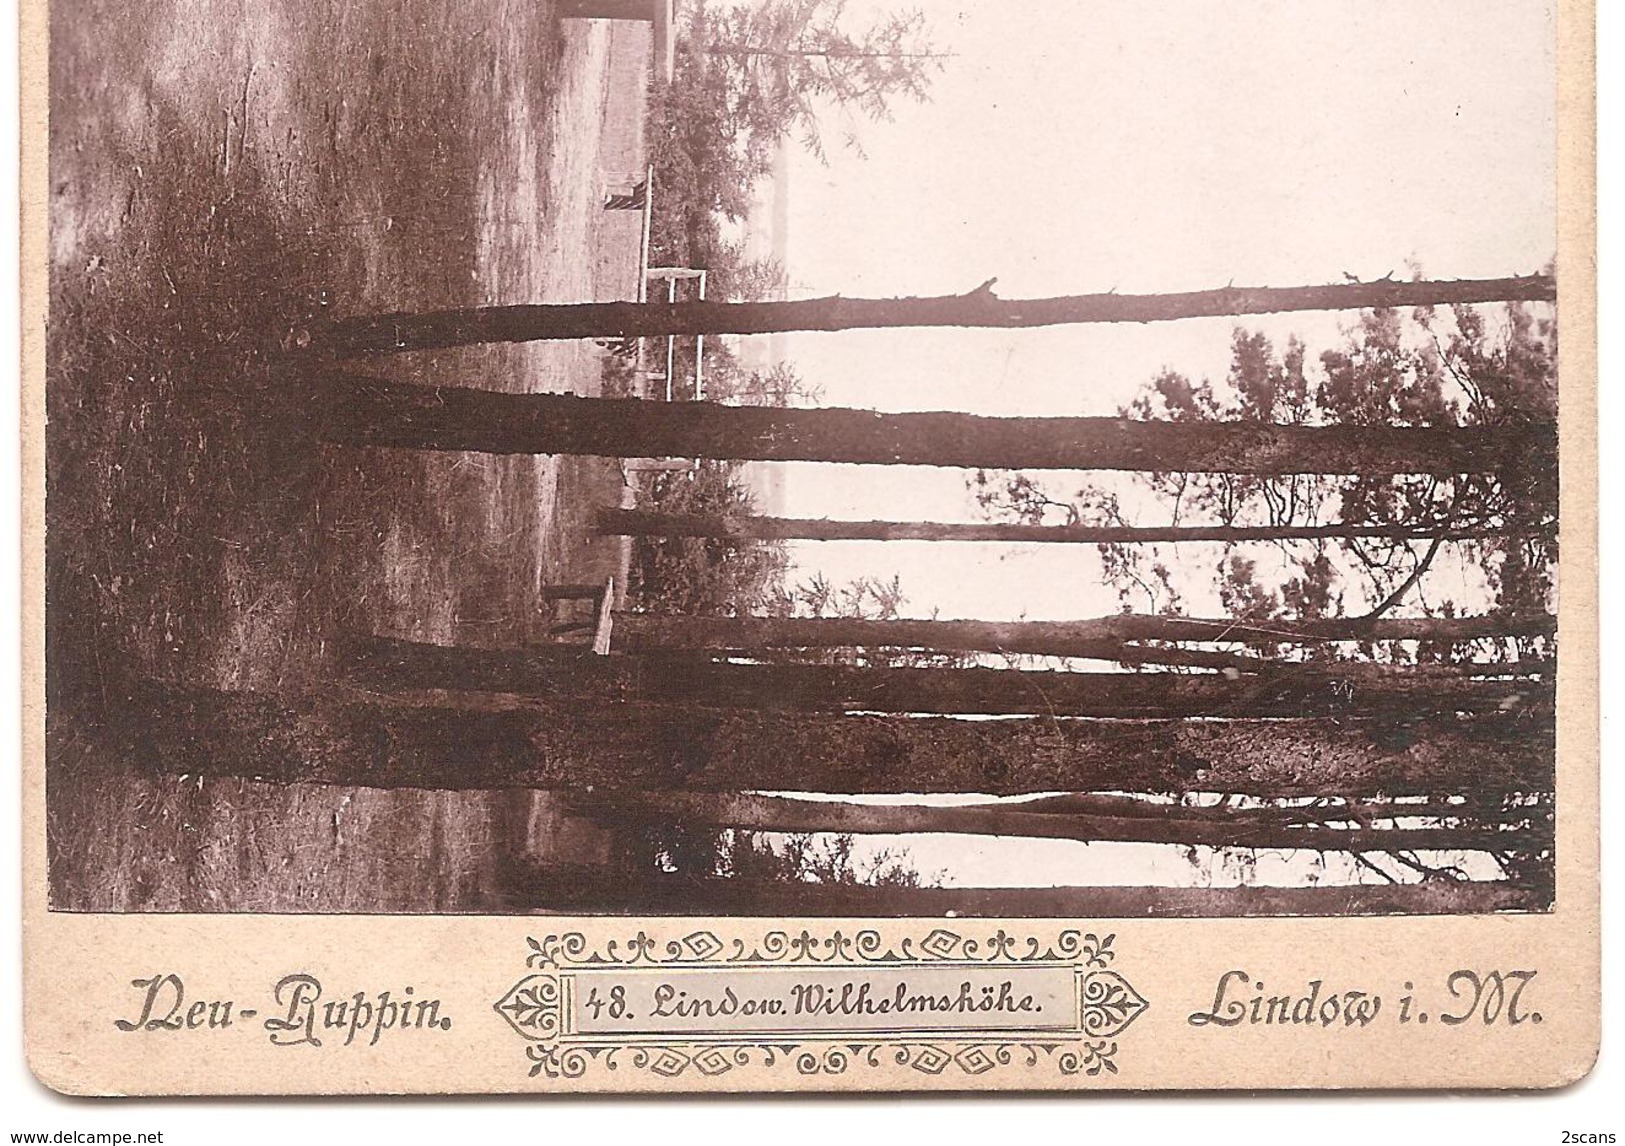 (Allemagne) - LINDOW IN DER MARK - Lot 4 PHOTOS 19è siècle (vers 1895), foto.Kietzer vorm.Ratkowsky Neu-Ruppin Neuruppin